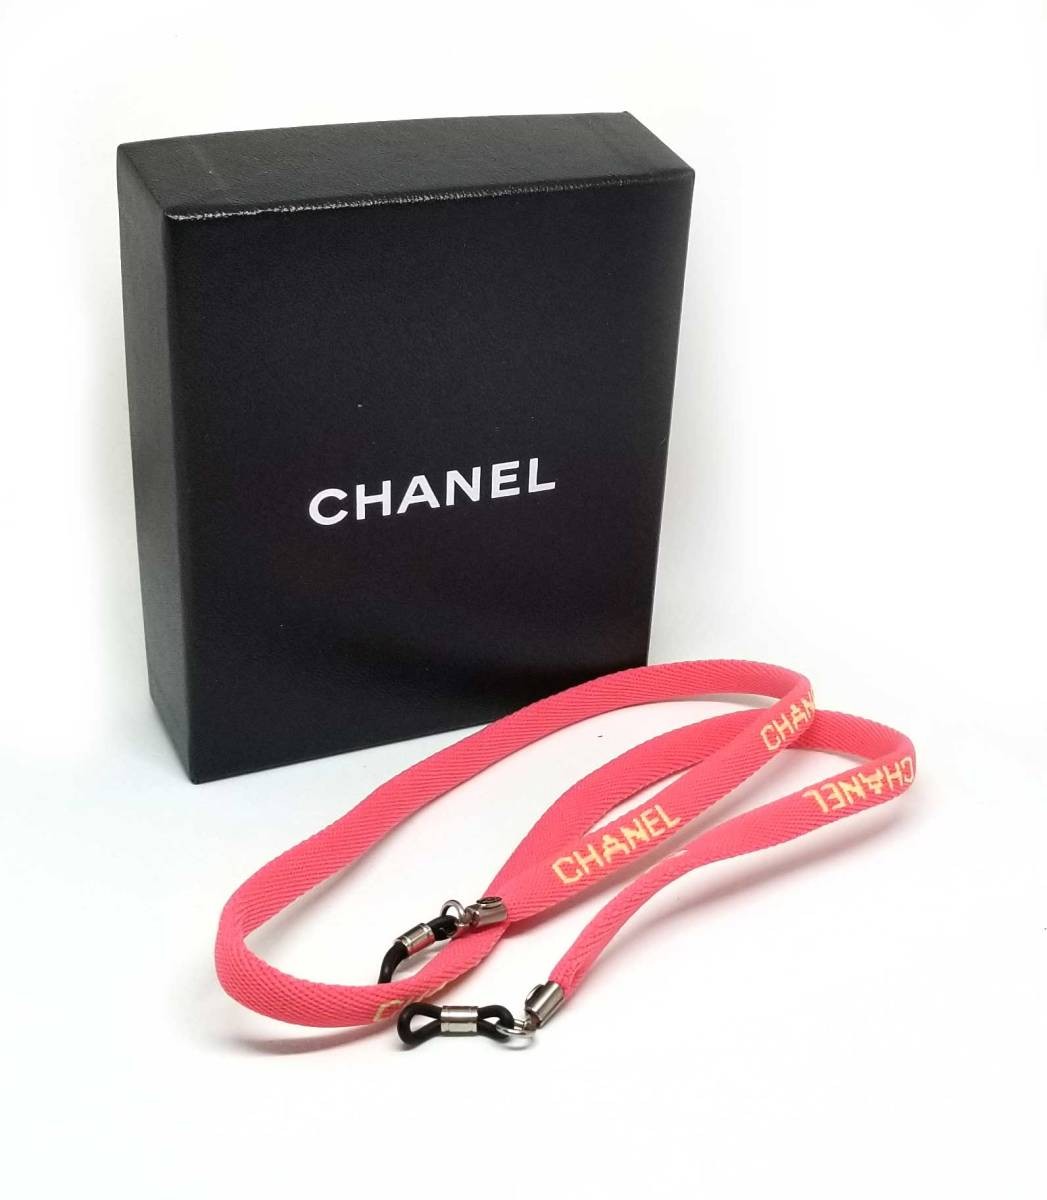  Chanel очки для ремешок очки код очки код Logo очки цепь парусина Pink Lady -s очки код CHANEL